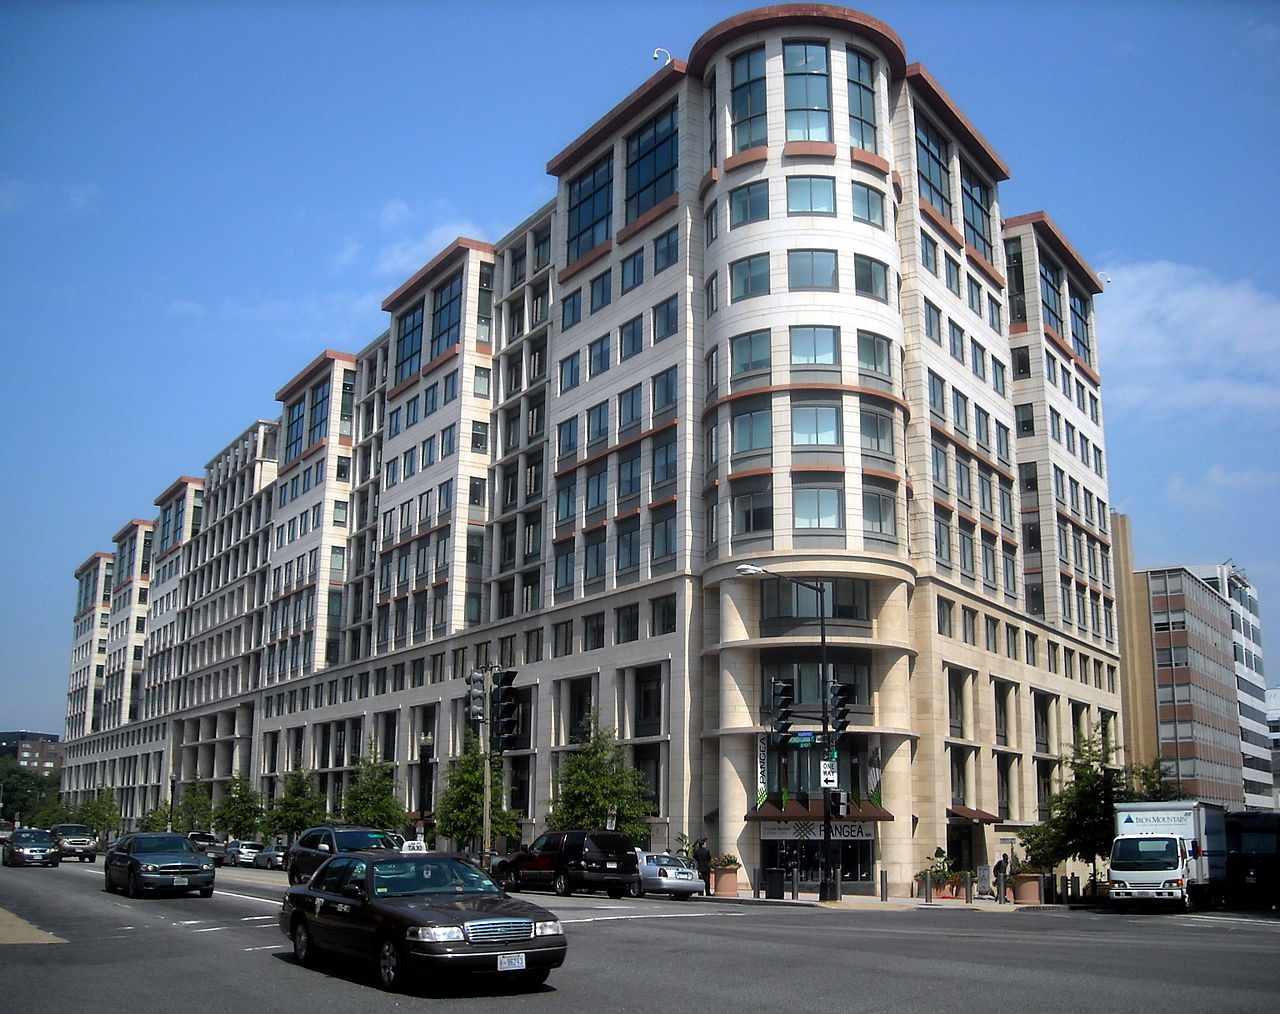 The International Finance Corporation headquarters, 2121 Pennsylvania Avenue, NW in the Foggy Bottom neighborhood of Washington, D.C.